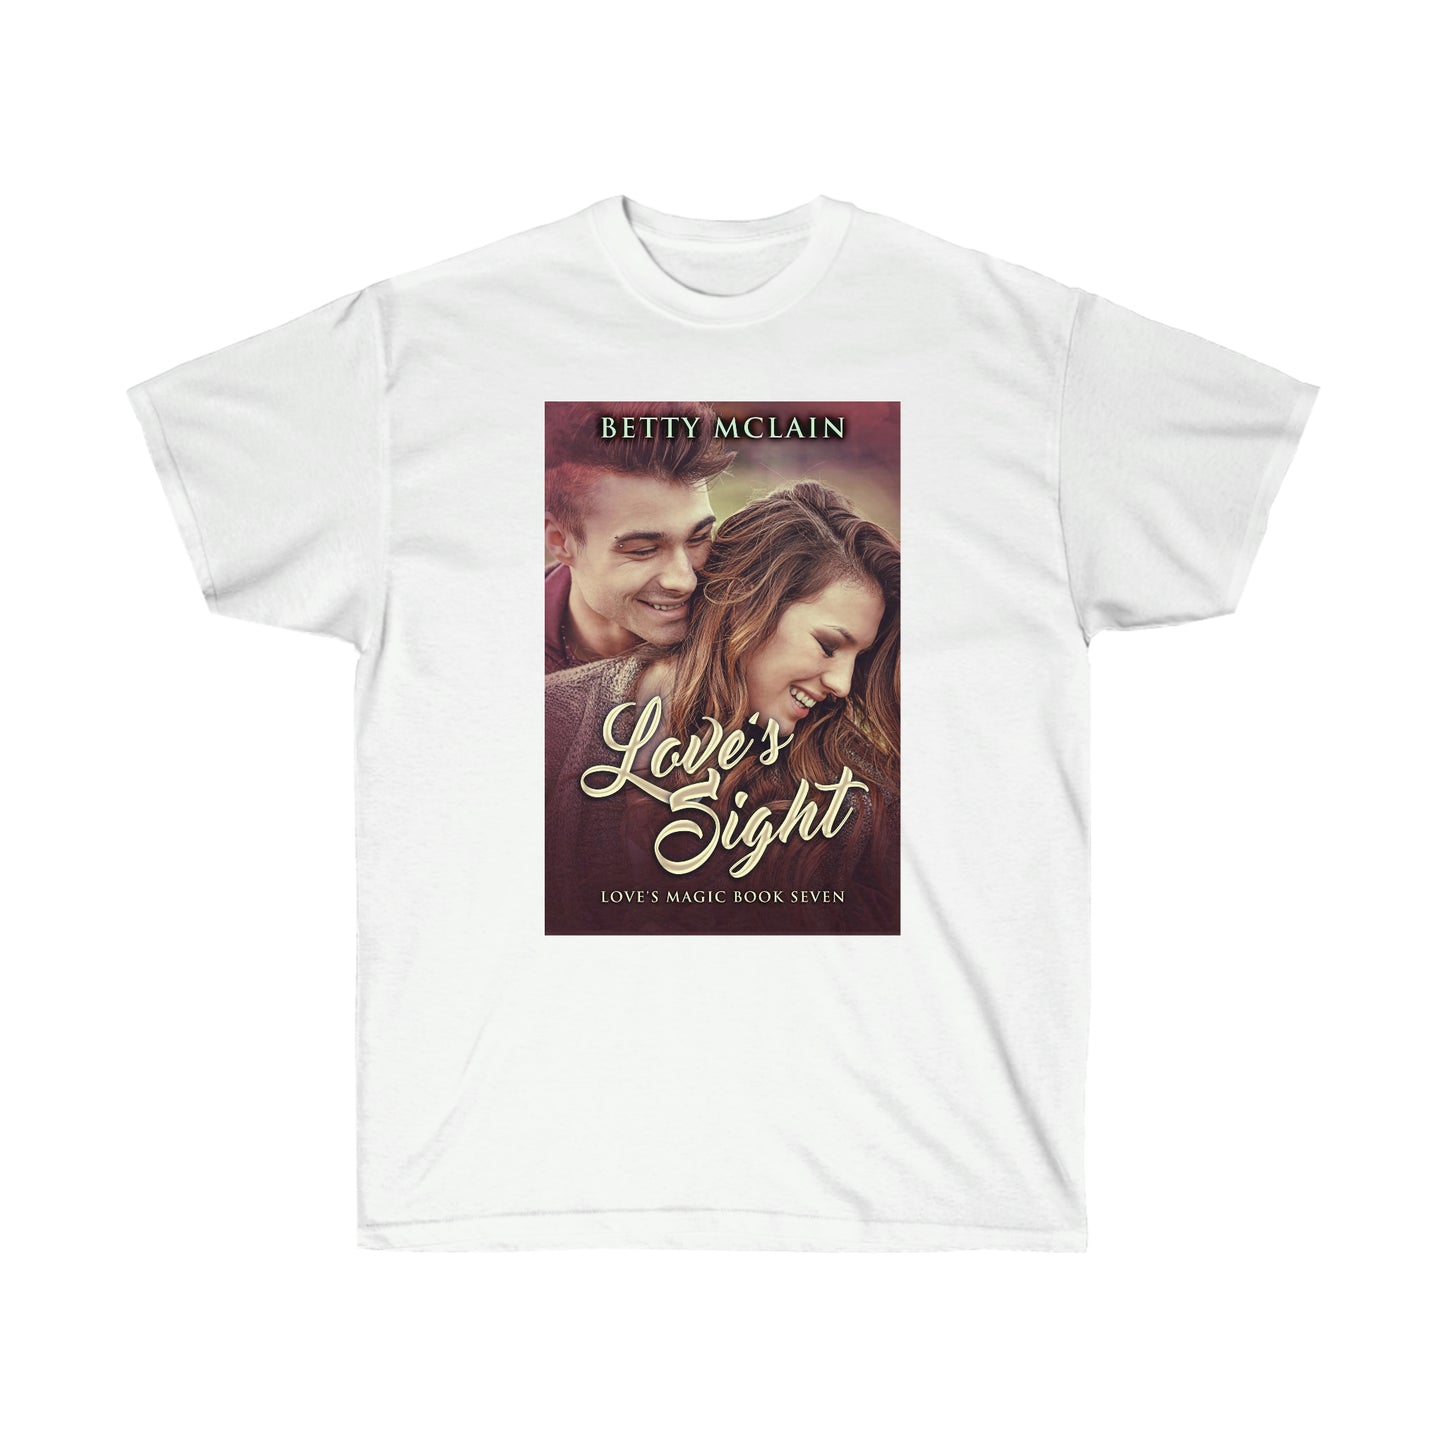 Love's Sight - Unisex T-Shirt